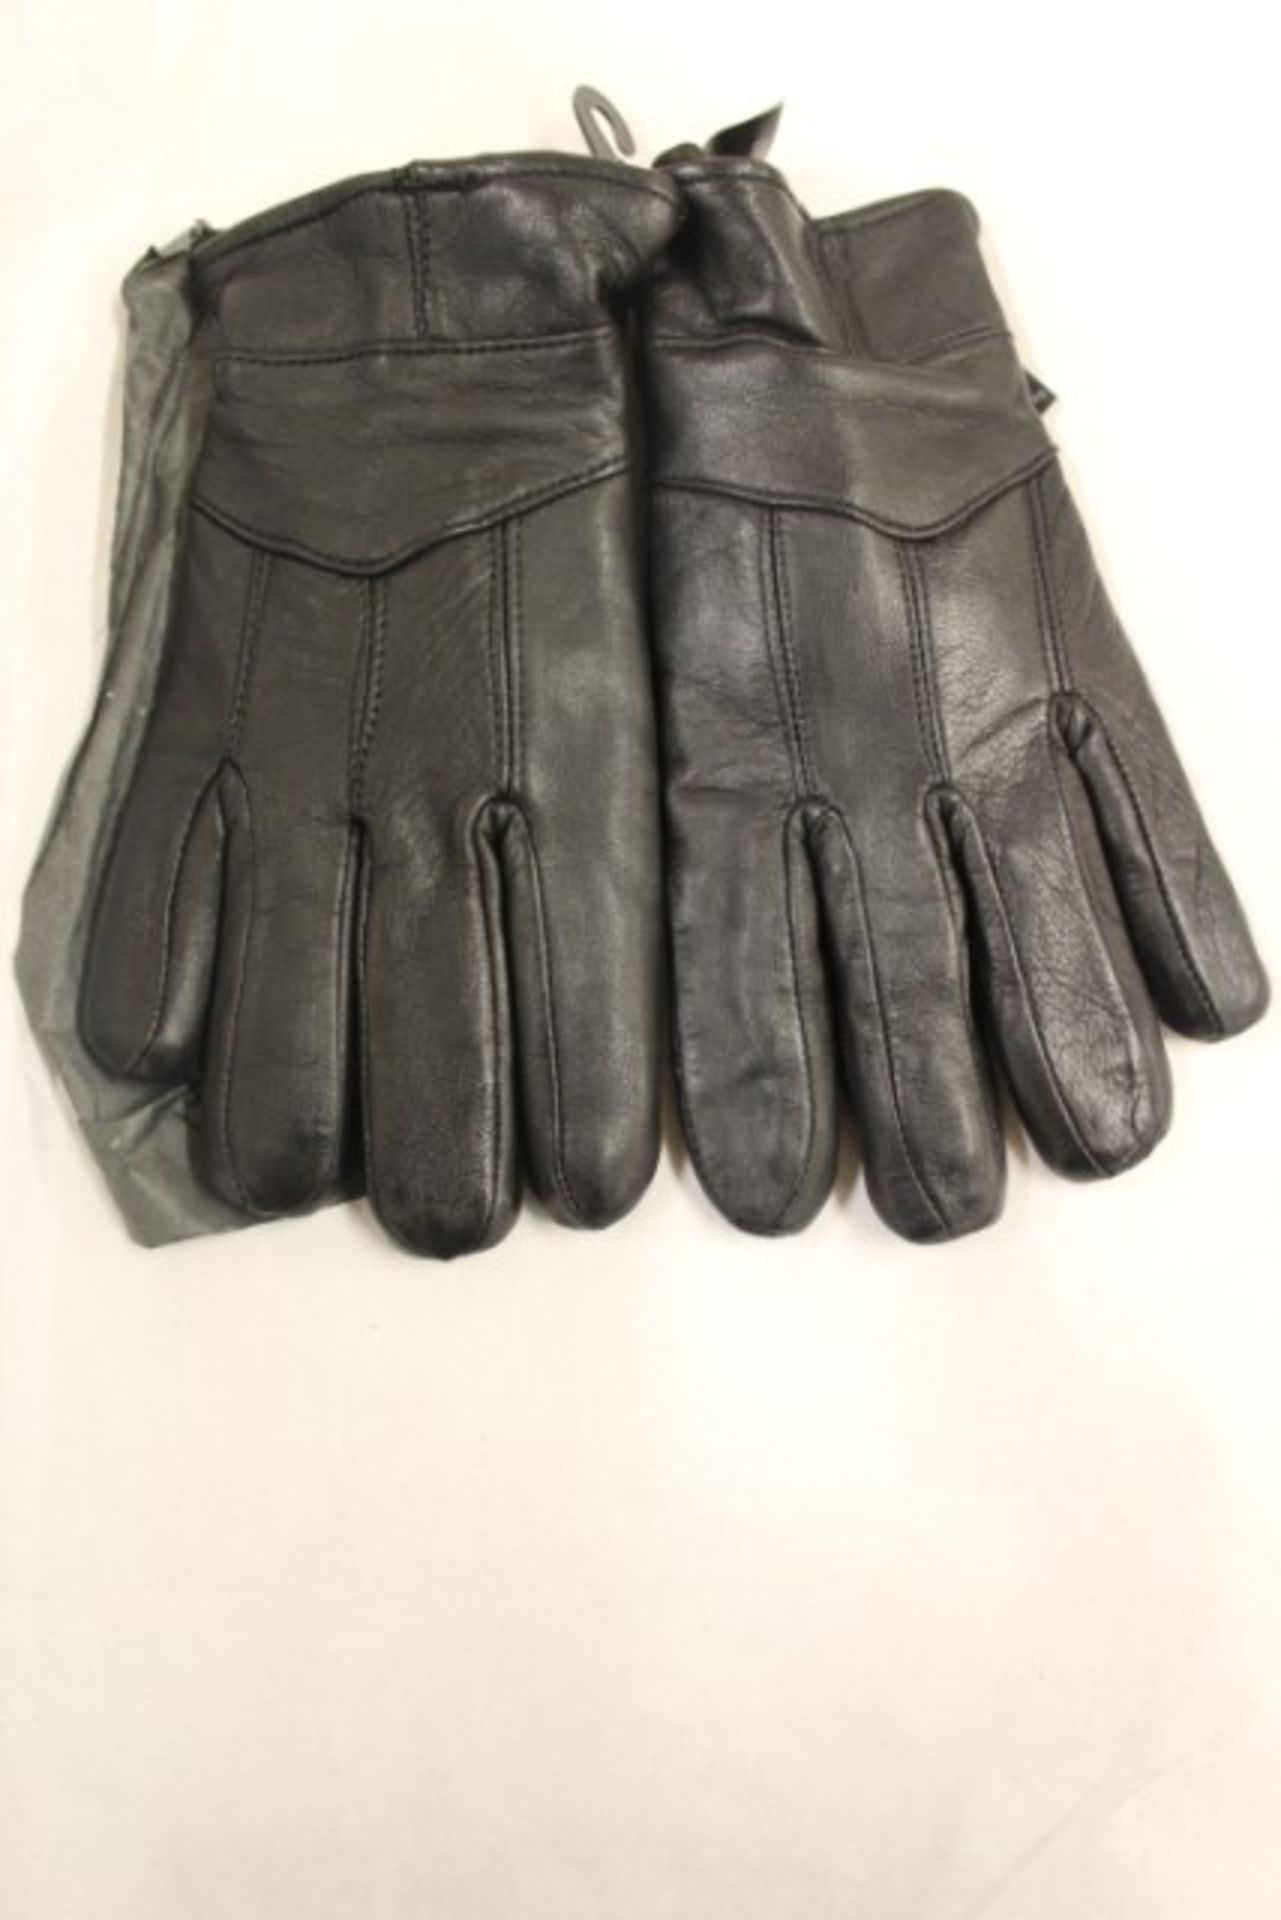 V Brand New Pair Black Leather Thomas Calvi Gloves Size M